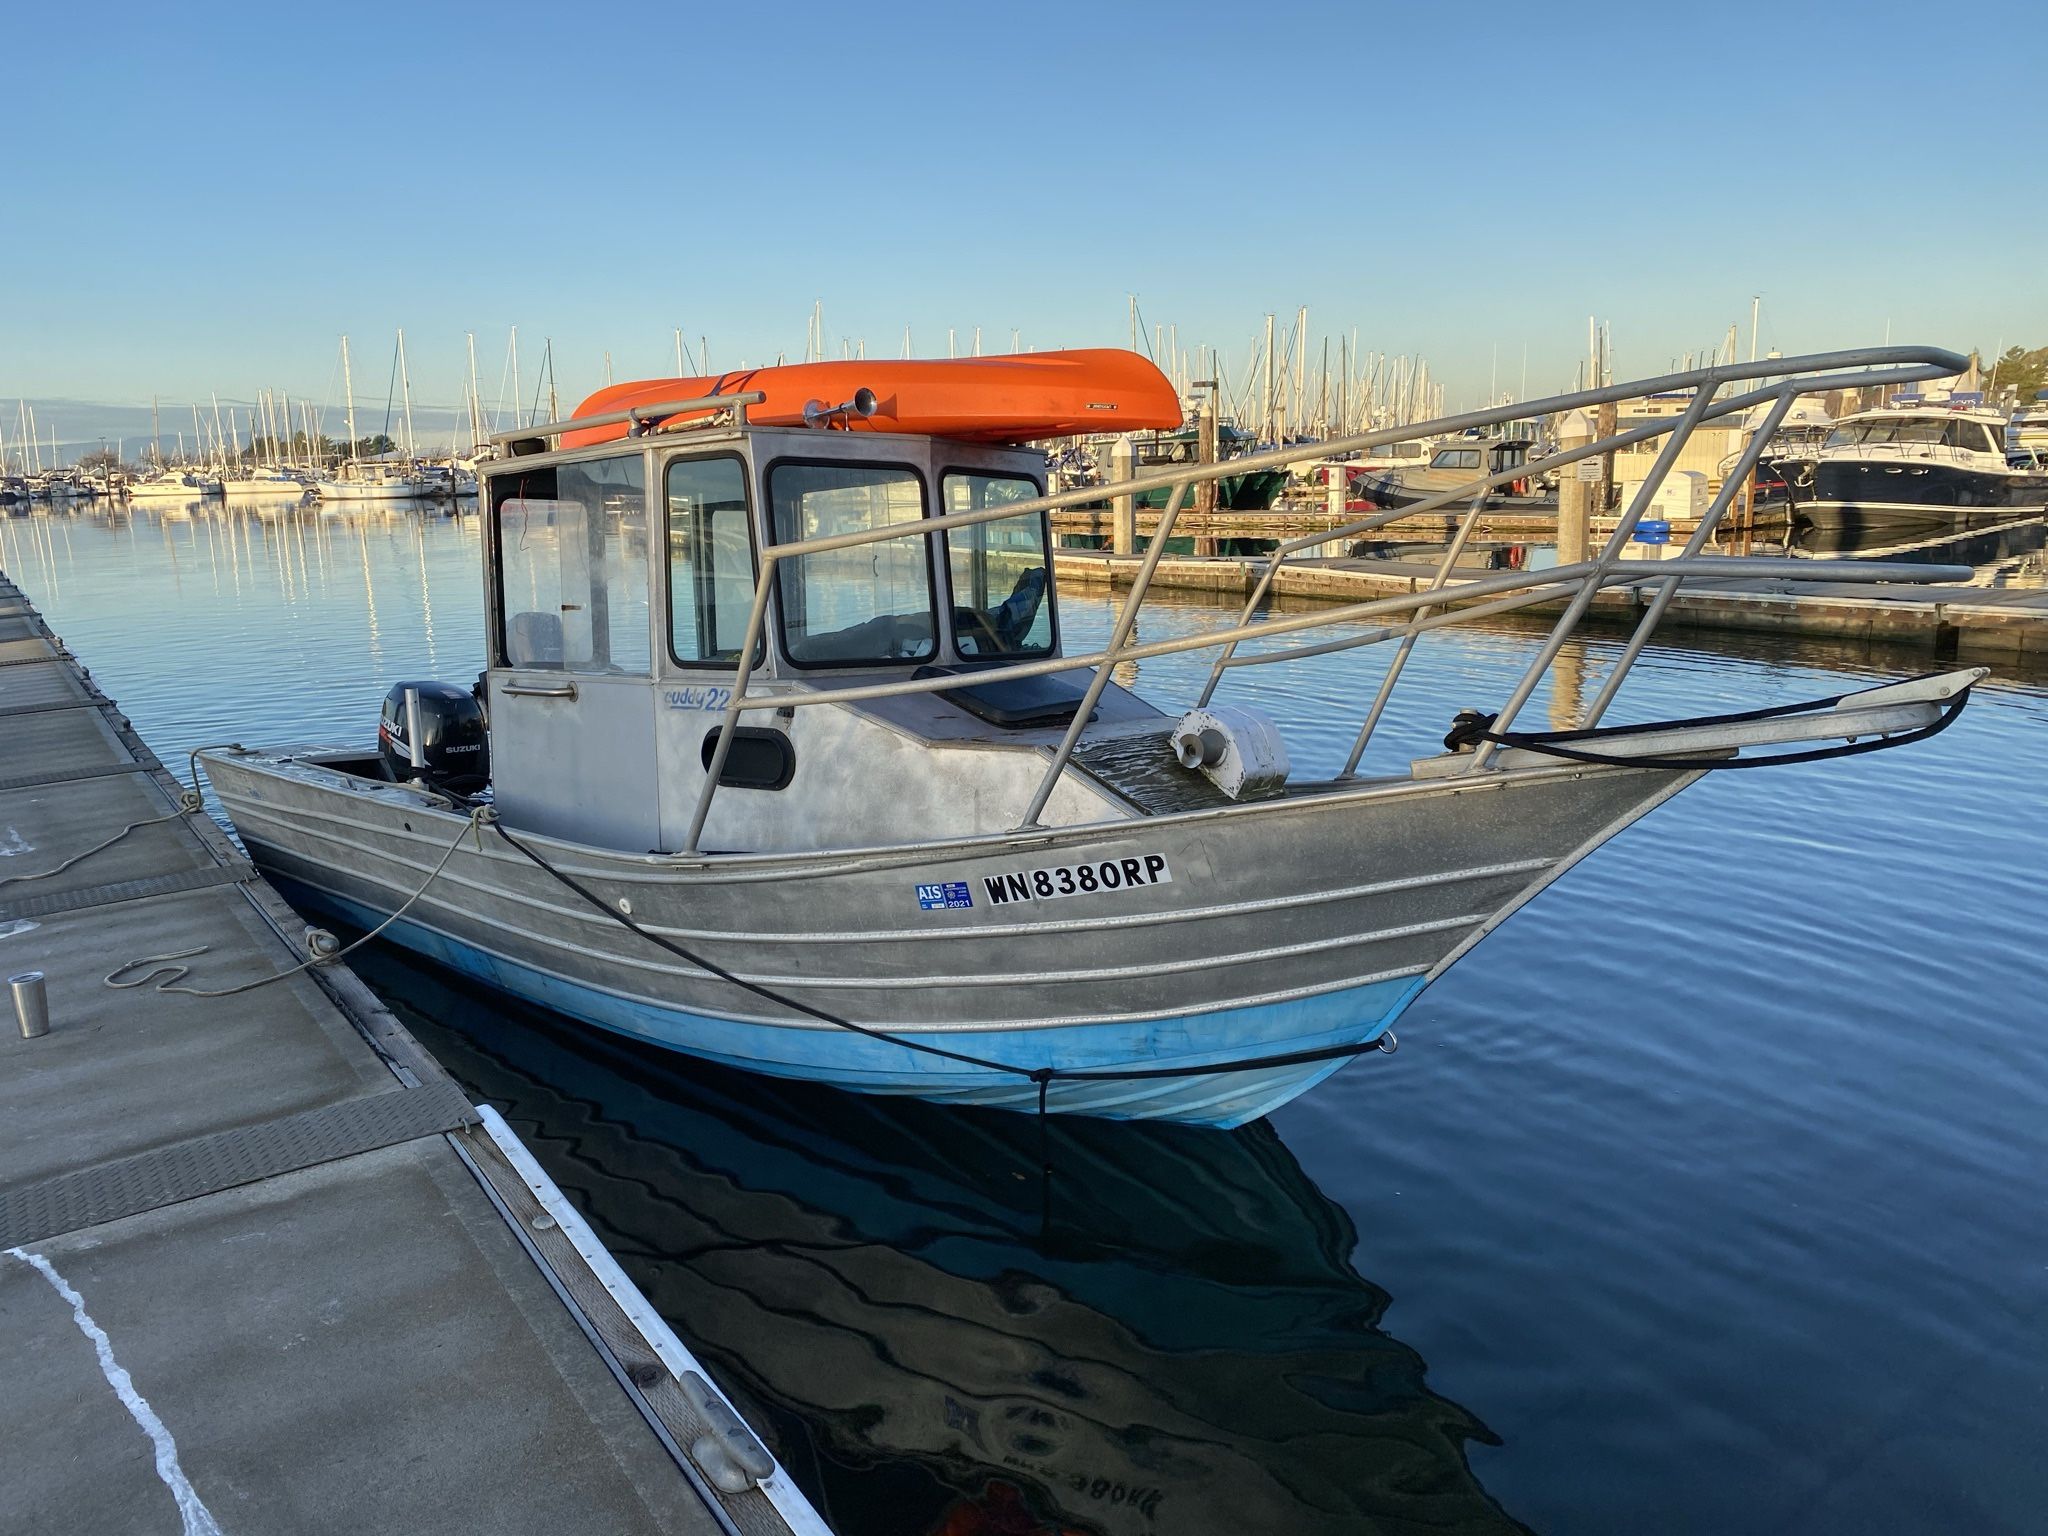 Valco bayrunner - Boats for Sale - Seamagazine